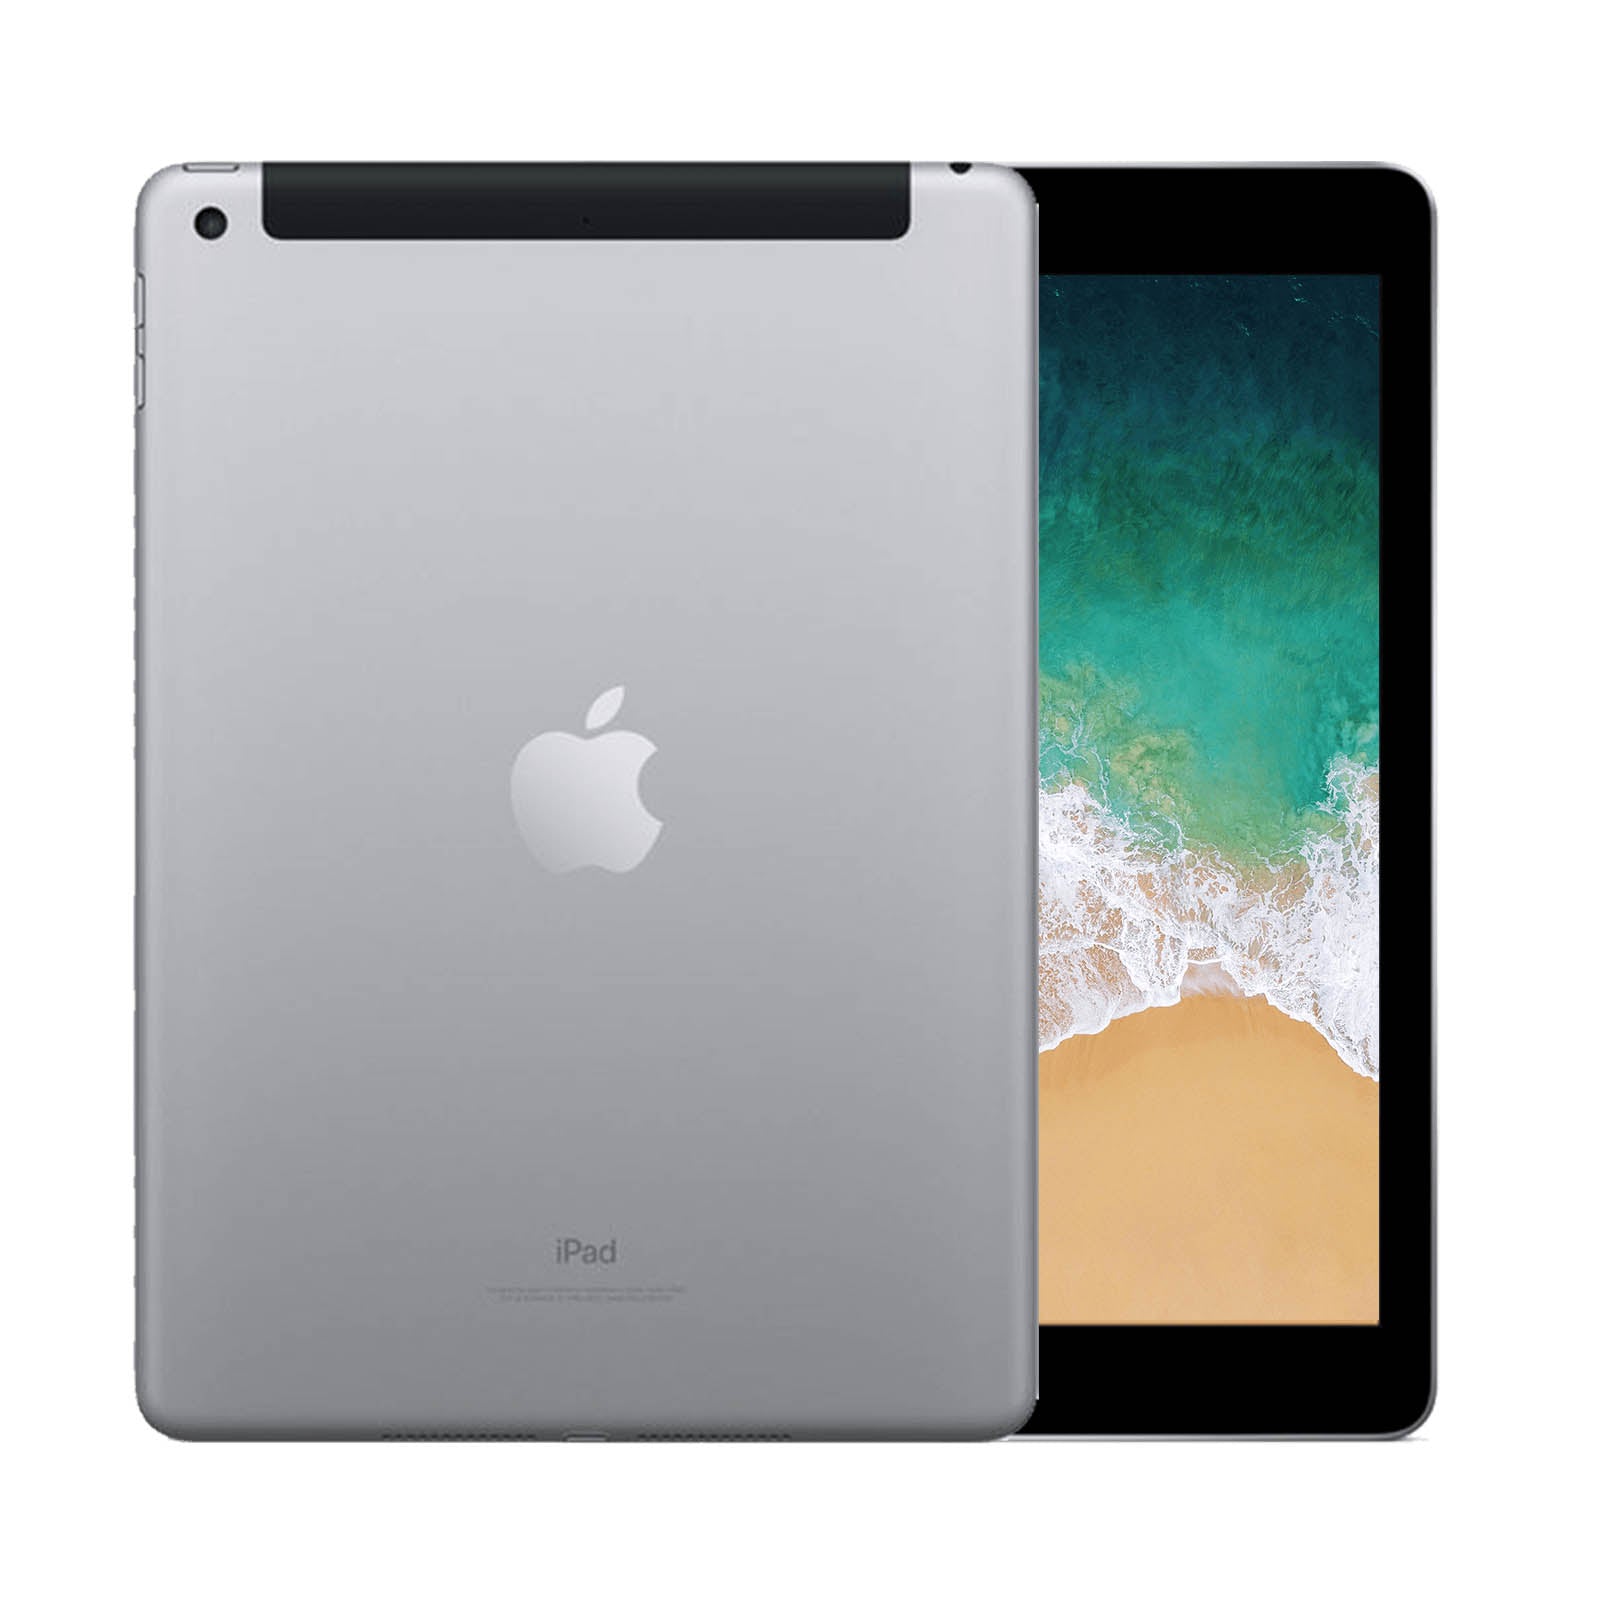 Apple iPad 4 16GB Black - WiFi & Cellular - Good 16GB Black Good